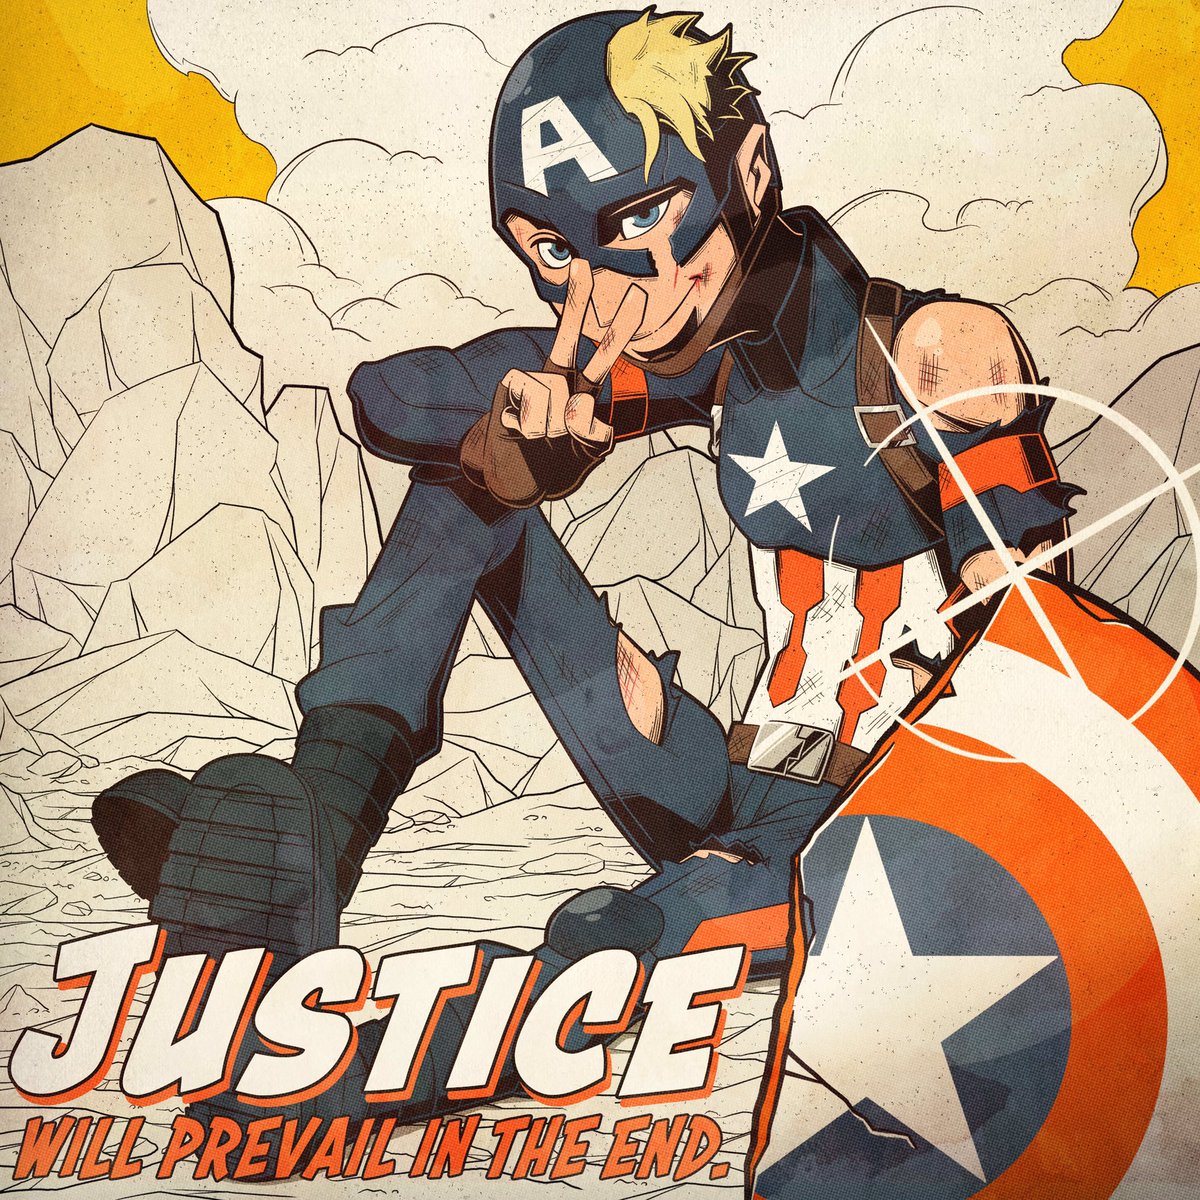 Rob ロブ V Twitter 最後に必ず正義が勝つ Captainamerica Marvel Comic Illustration Art Drawing Paint Fanart キャプテンアメリカ マーベル アメコミ イラスト アート 絵 ファンアート T Co Kv0epyv2xl